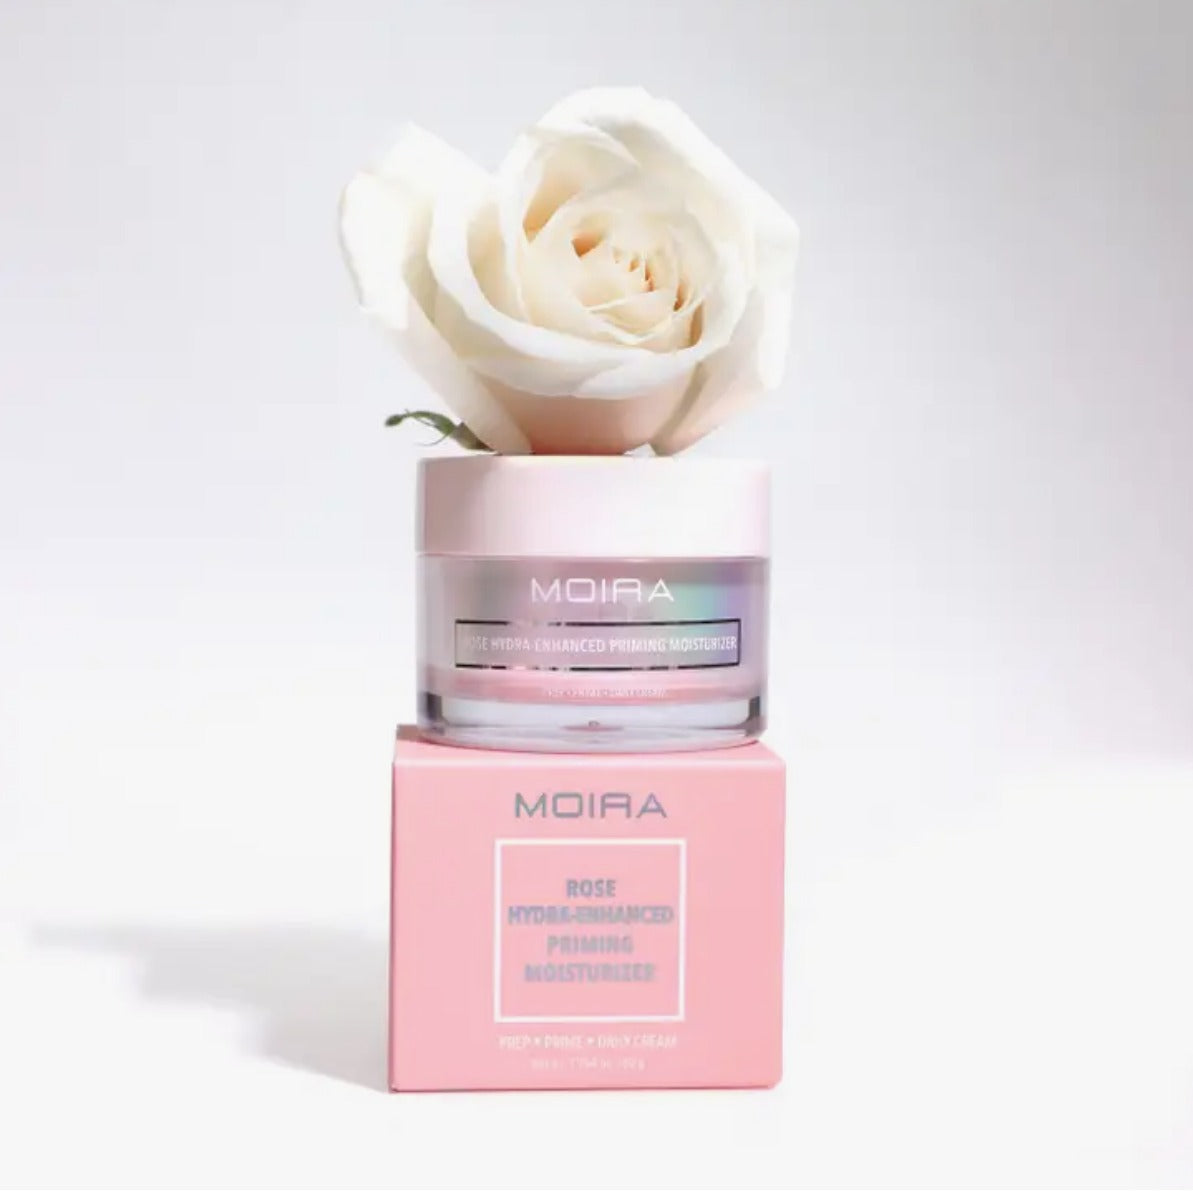 Moira, Rose Hydra Enhanced Priming Moisturizer, Korean Cosmetics